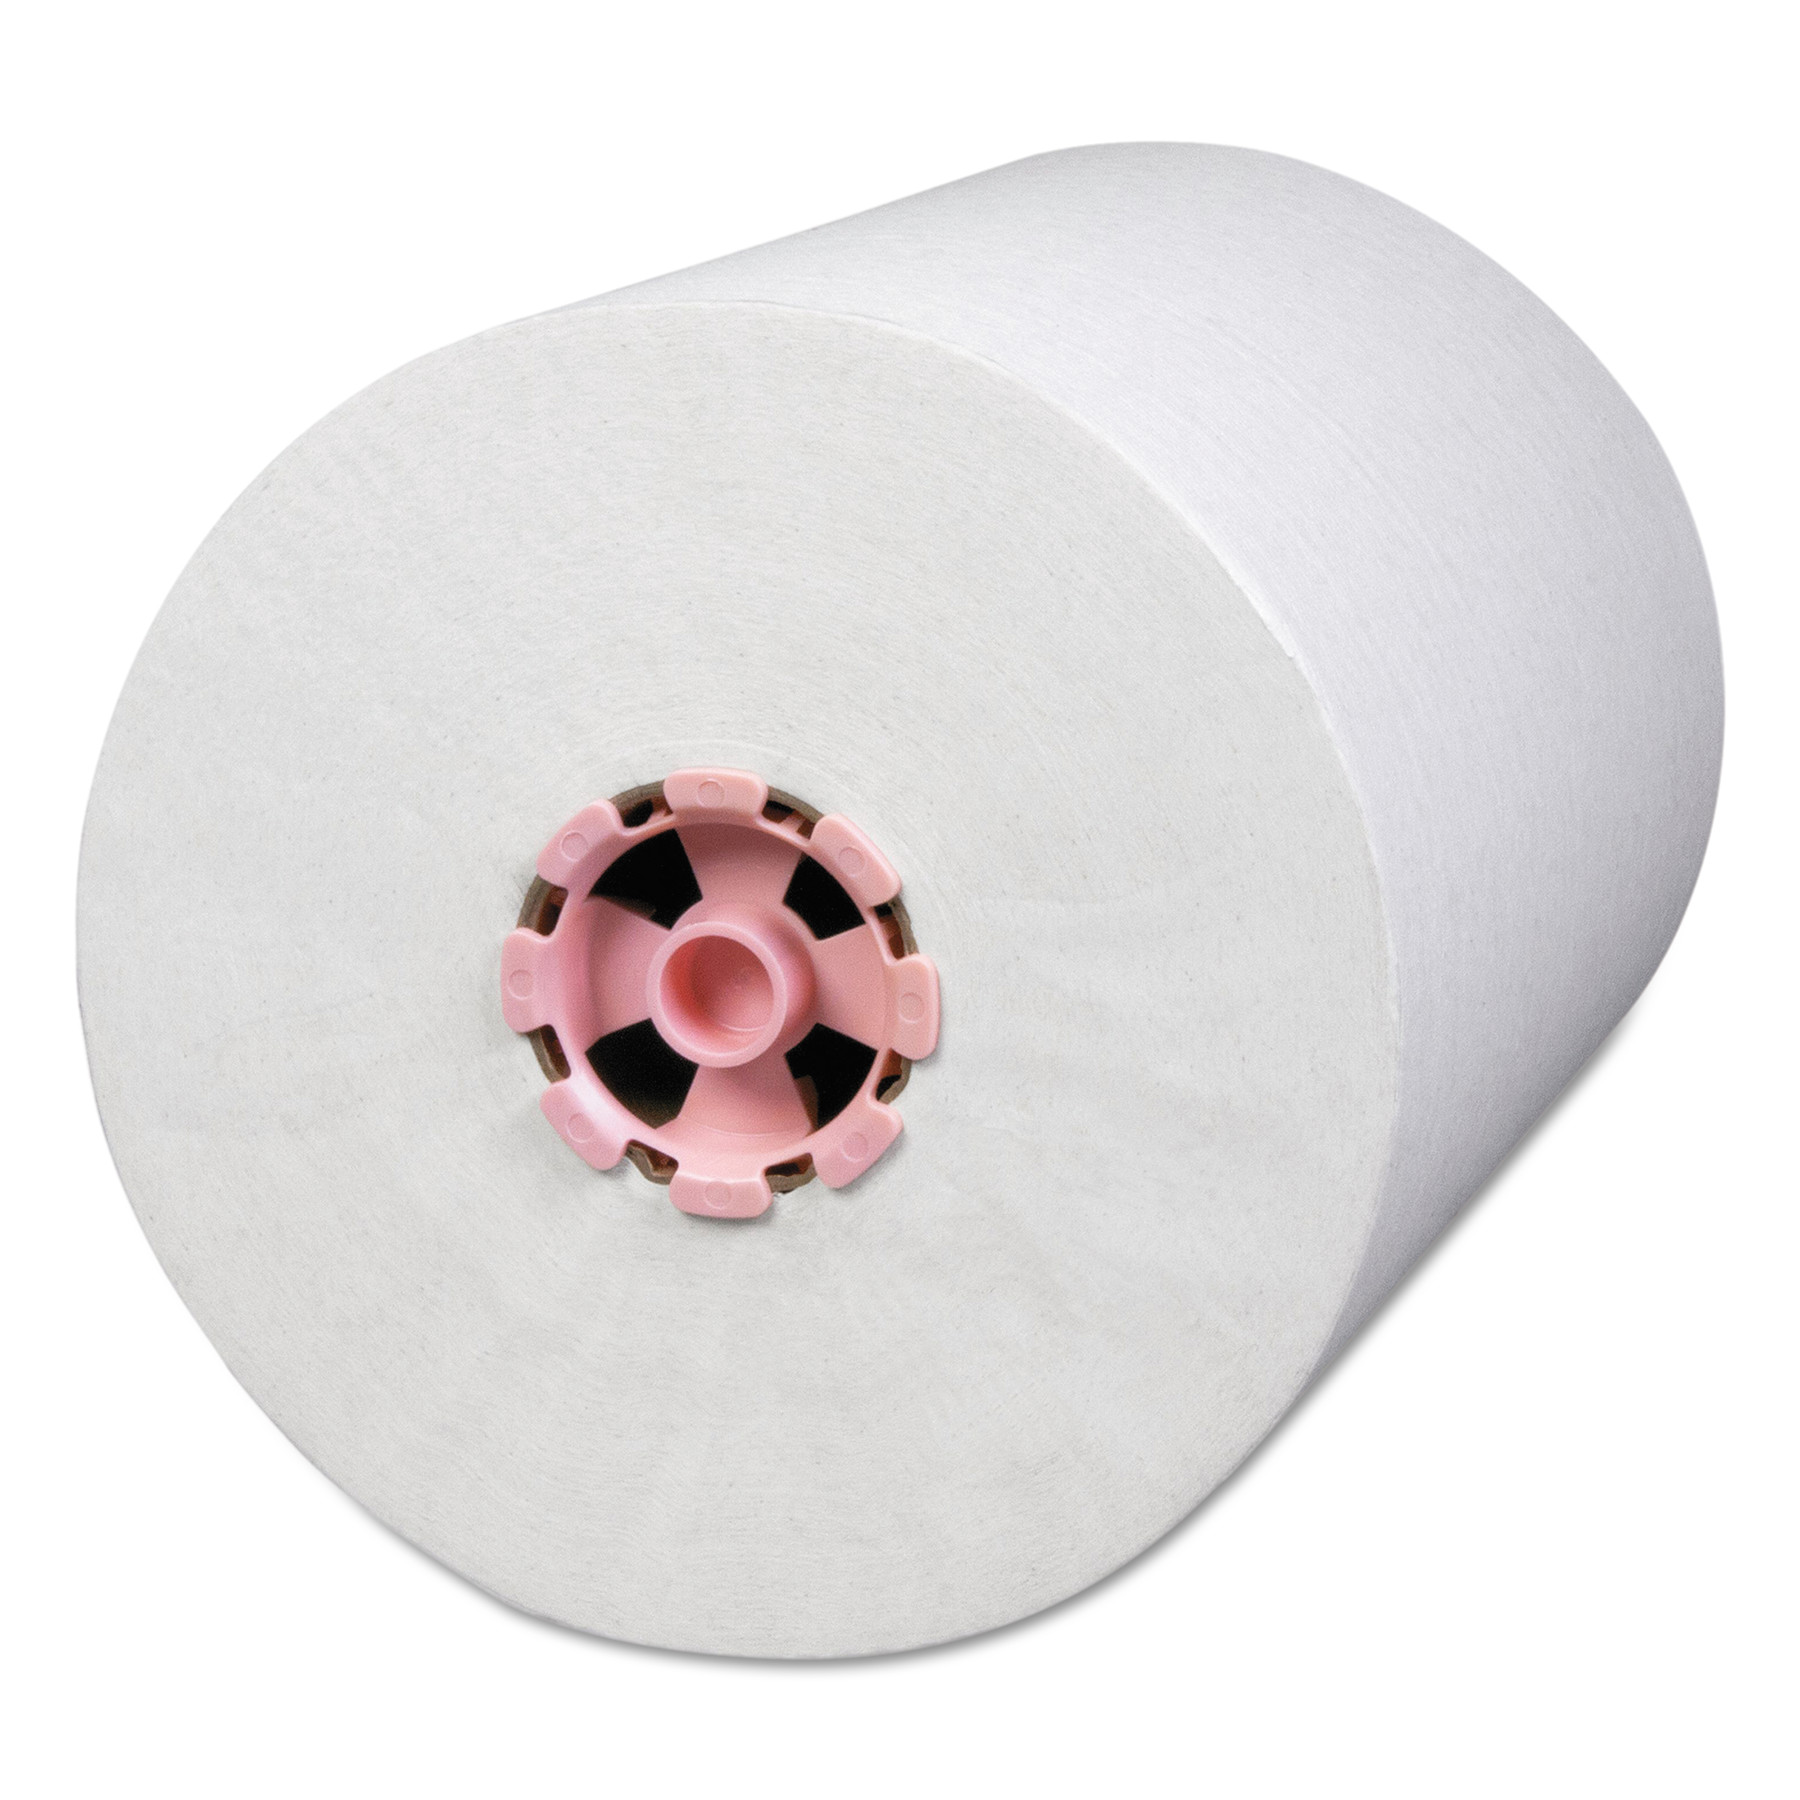 Slimroll Hard Roll Towels, 8" x 580 ft, White, 6 Rolls/Carton